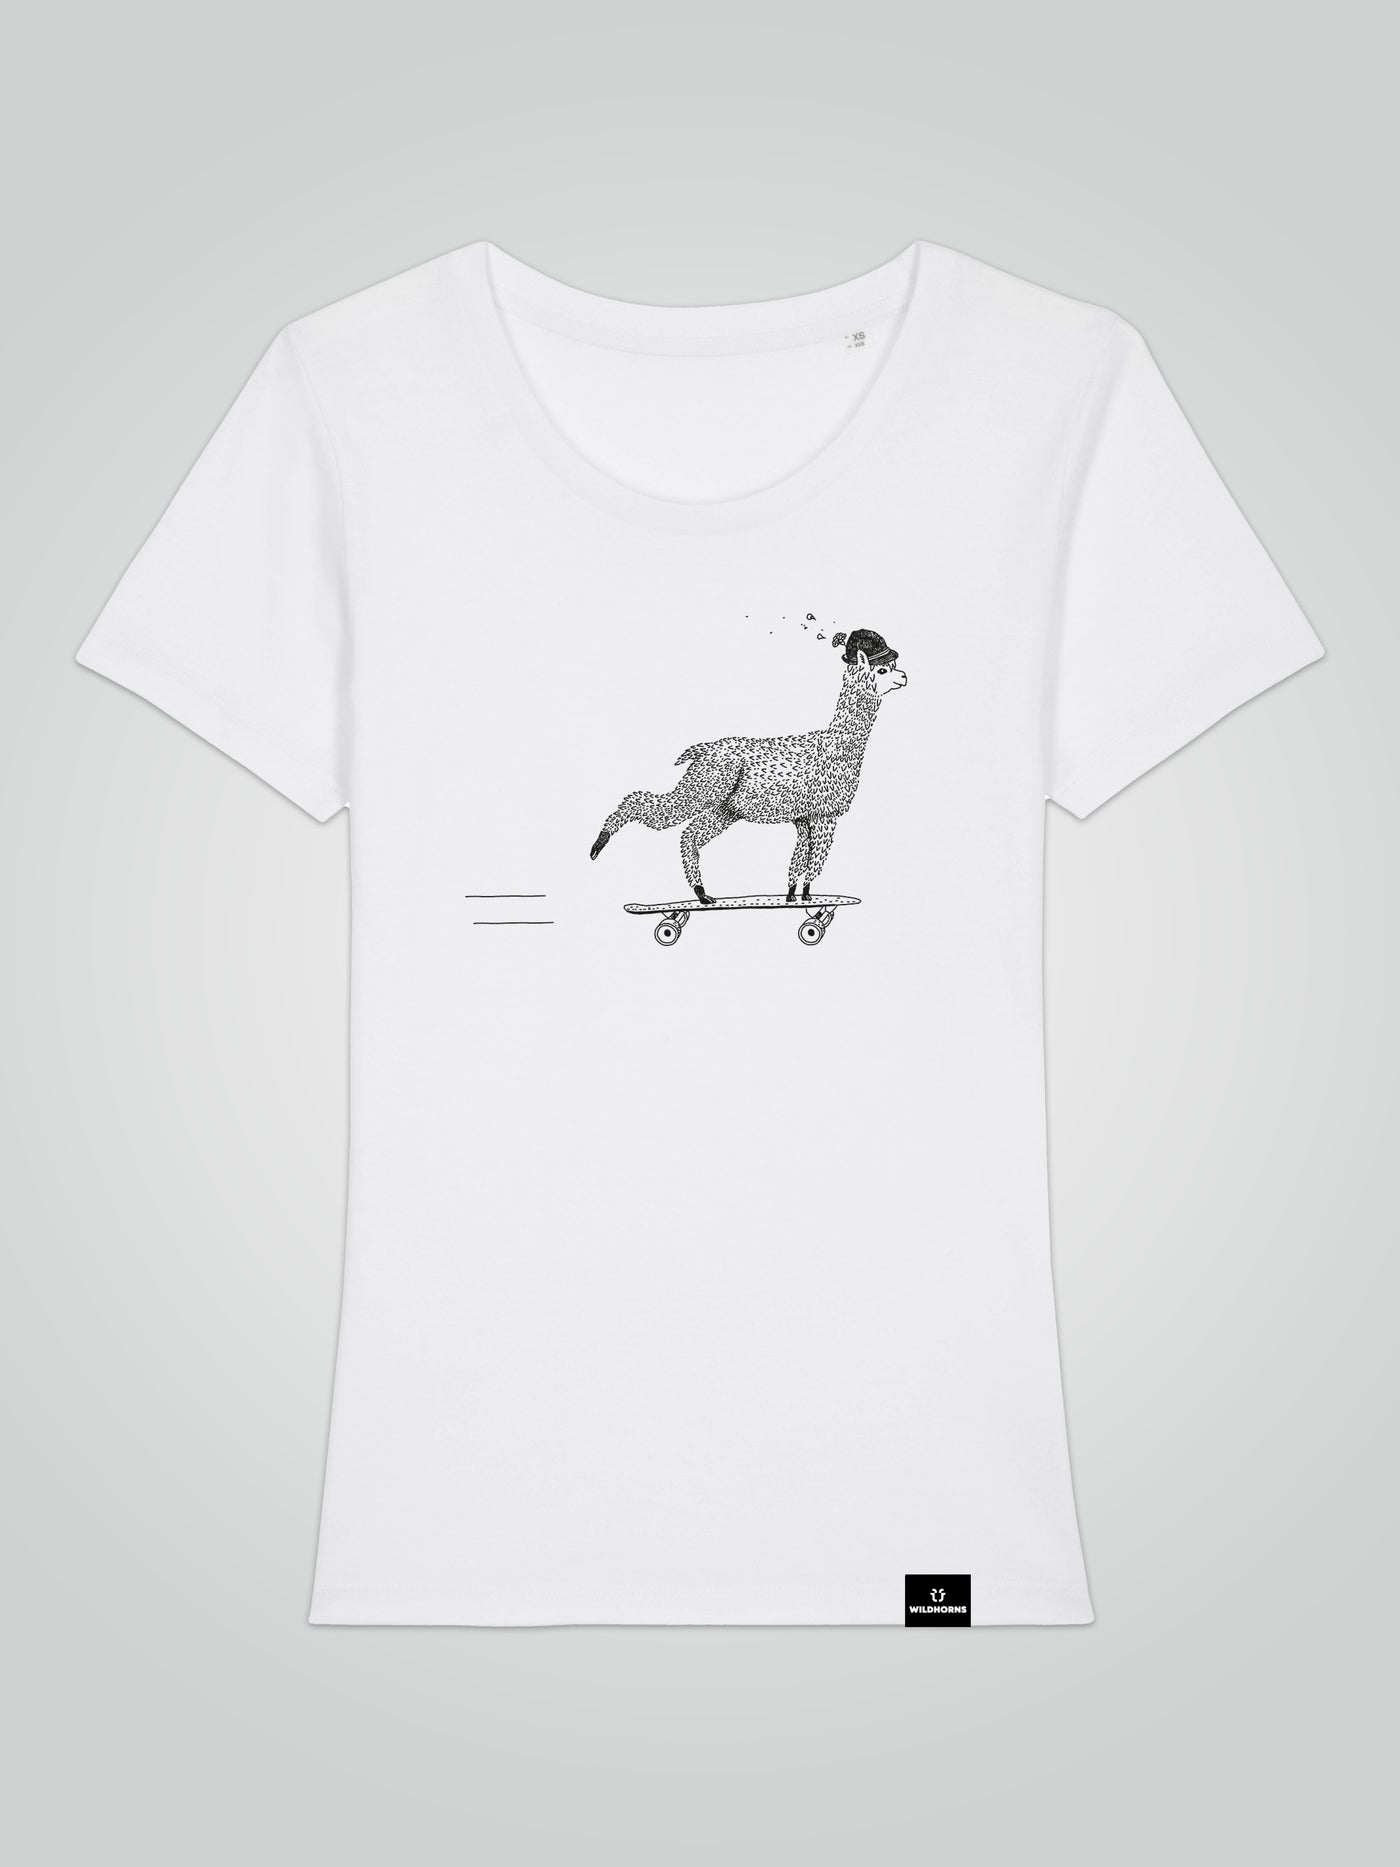 Alpacabana Longboarder - Women's Fitted T-Shirt